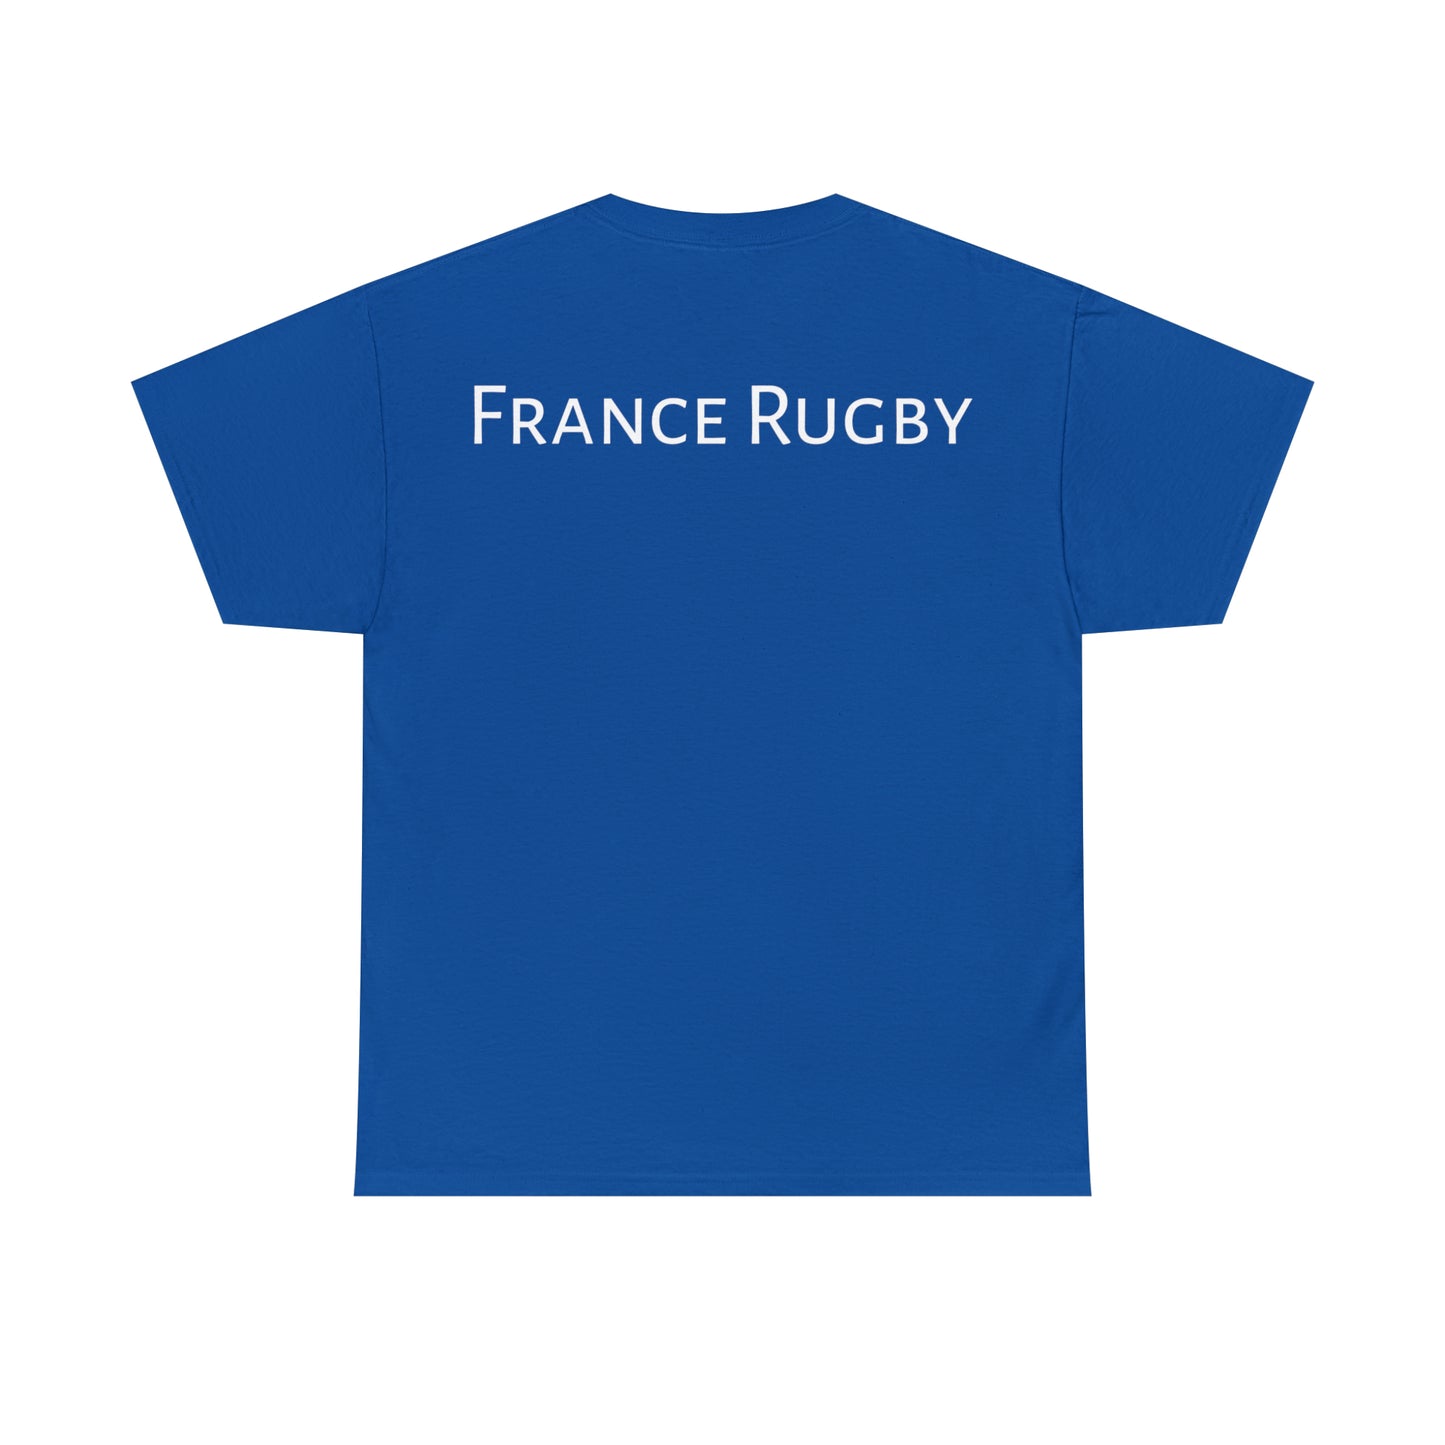 Post Match France - dark shirts